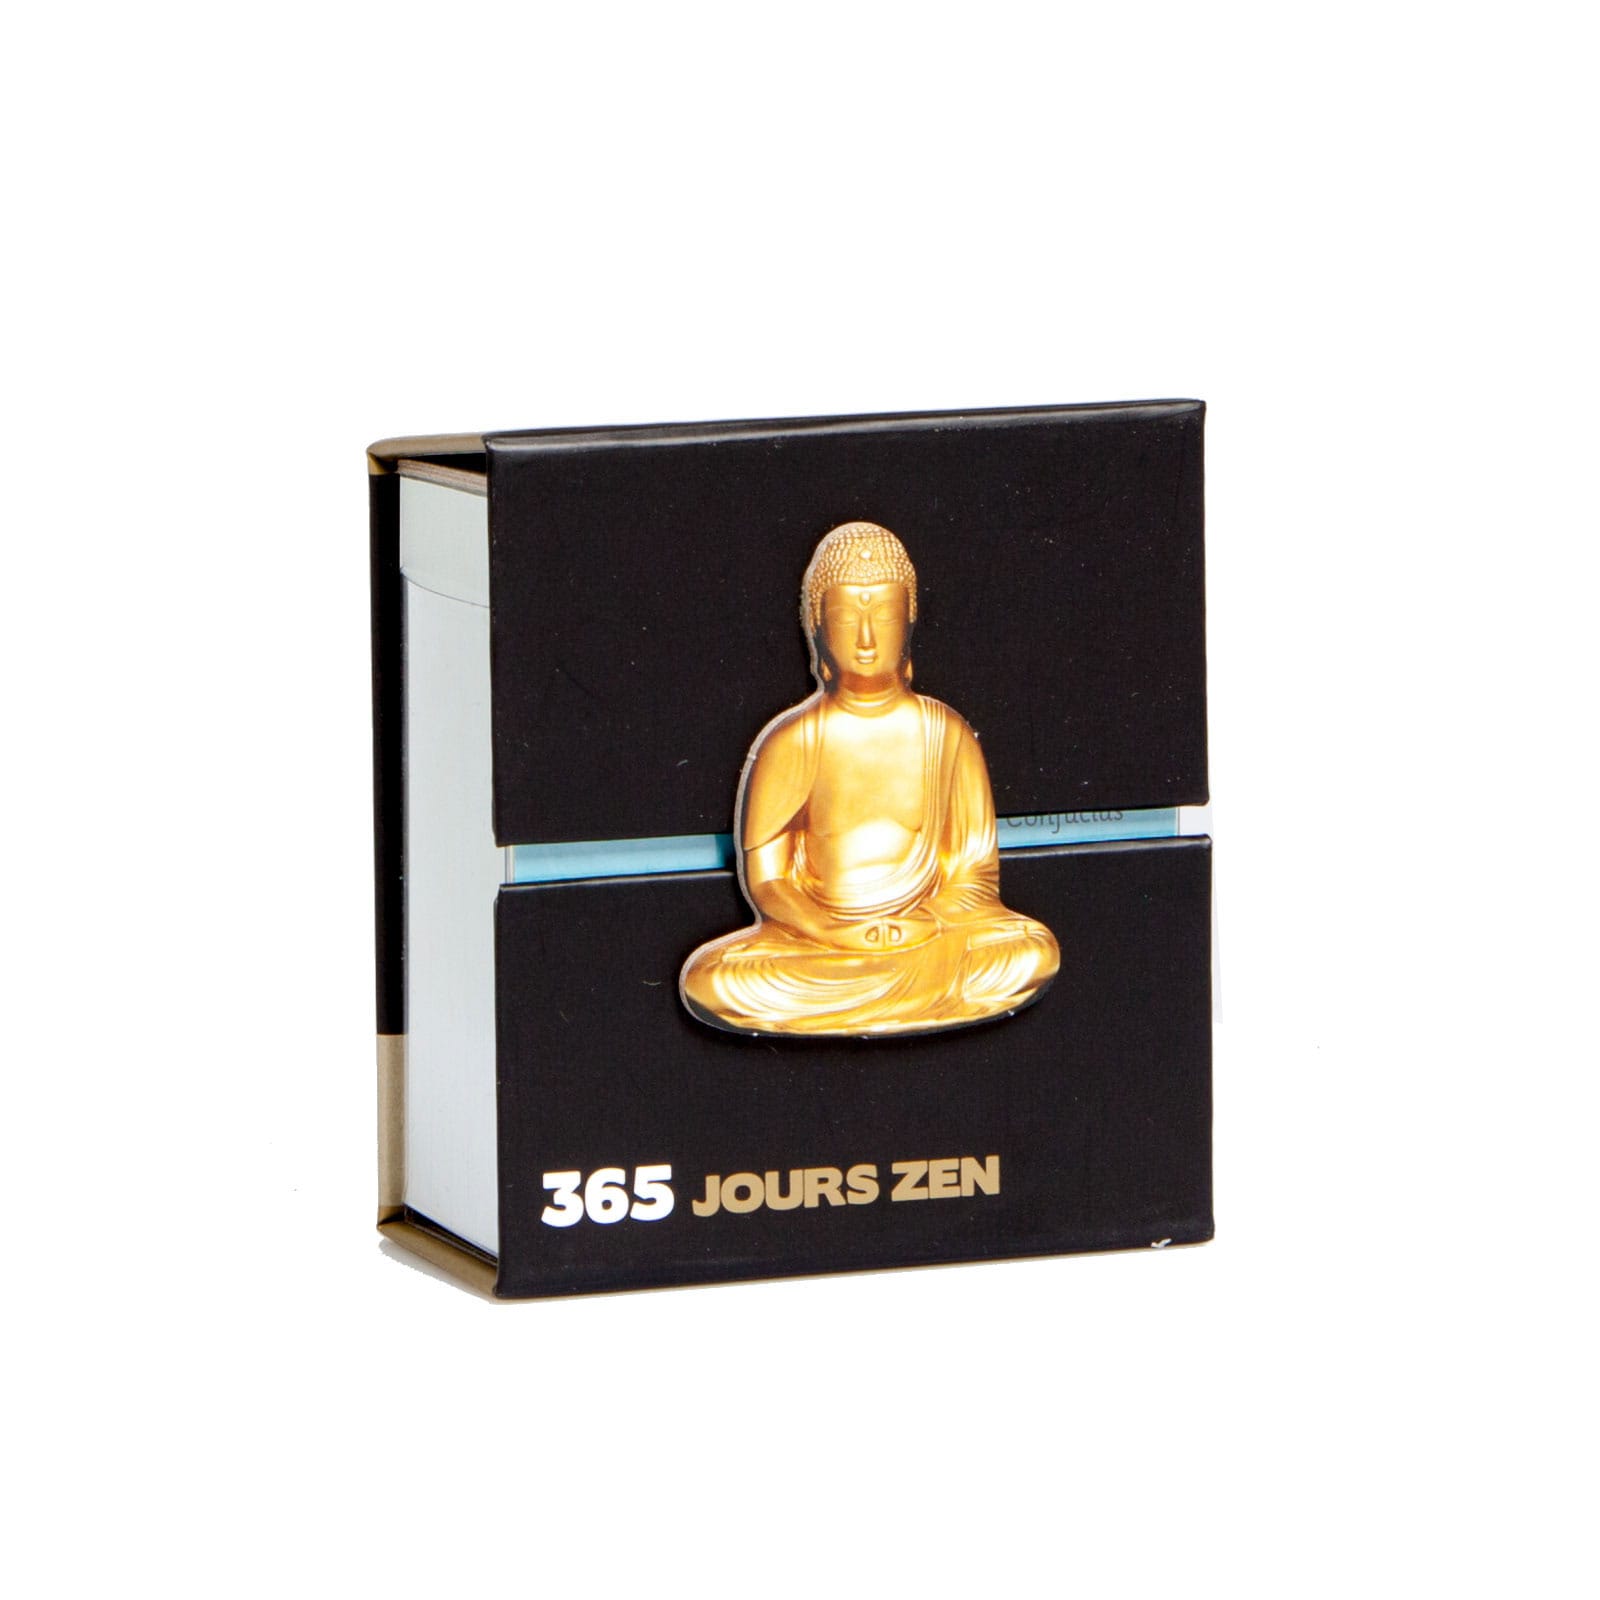 Mon petit agenda Zen 2021: Editions 365: 9782377614851